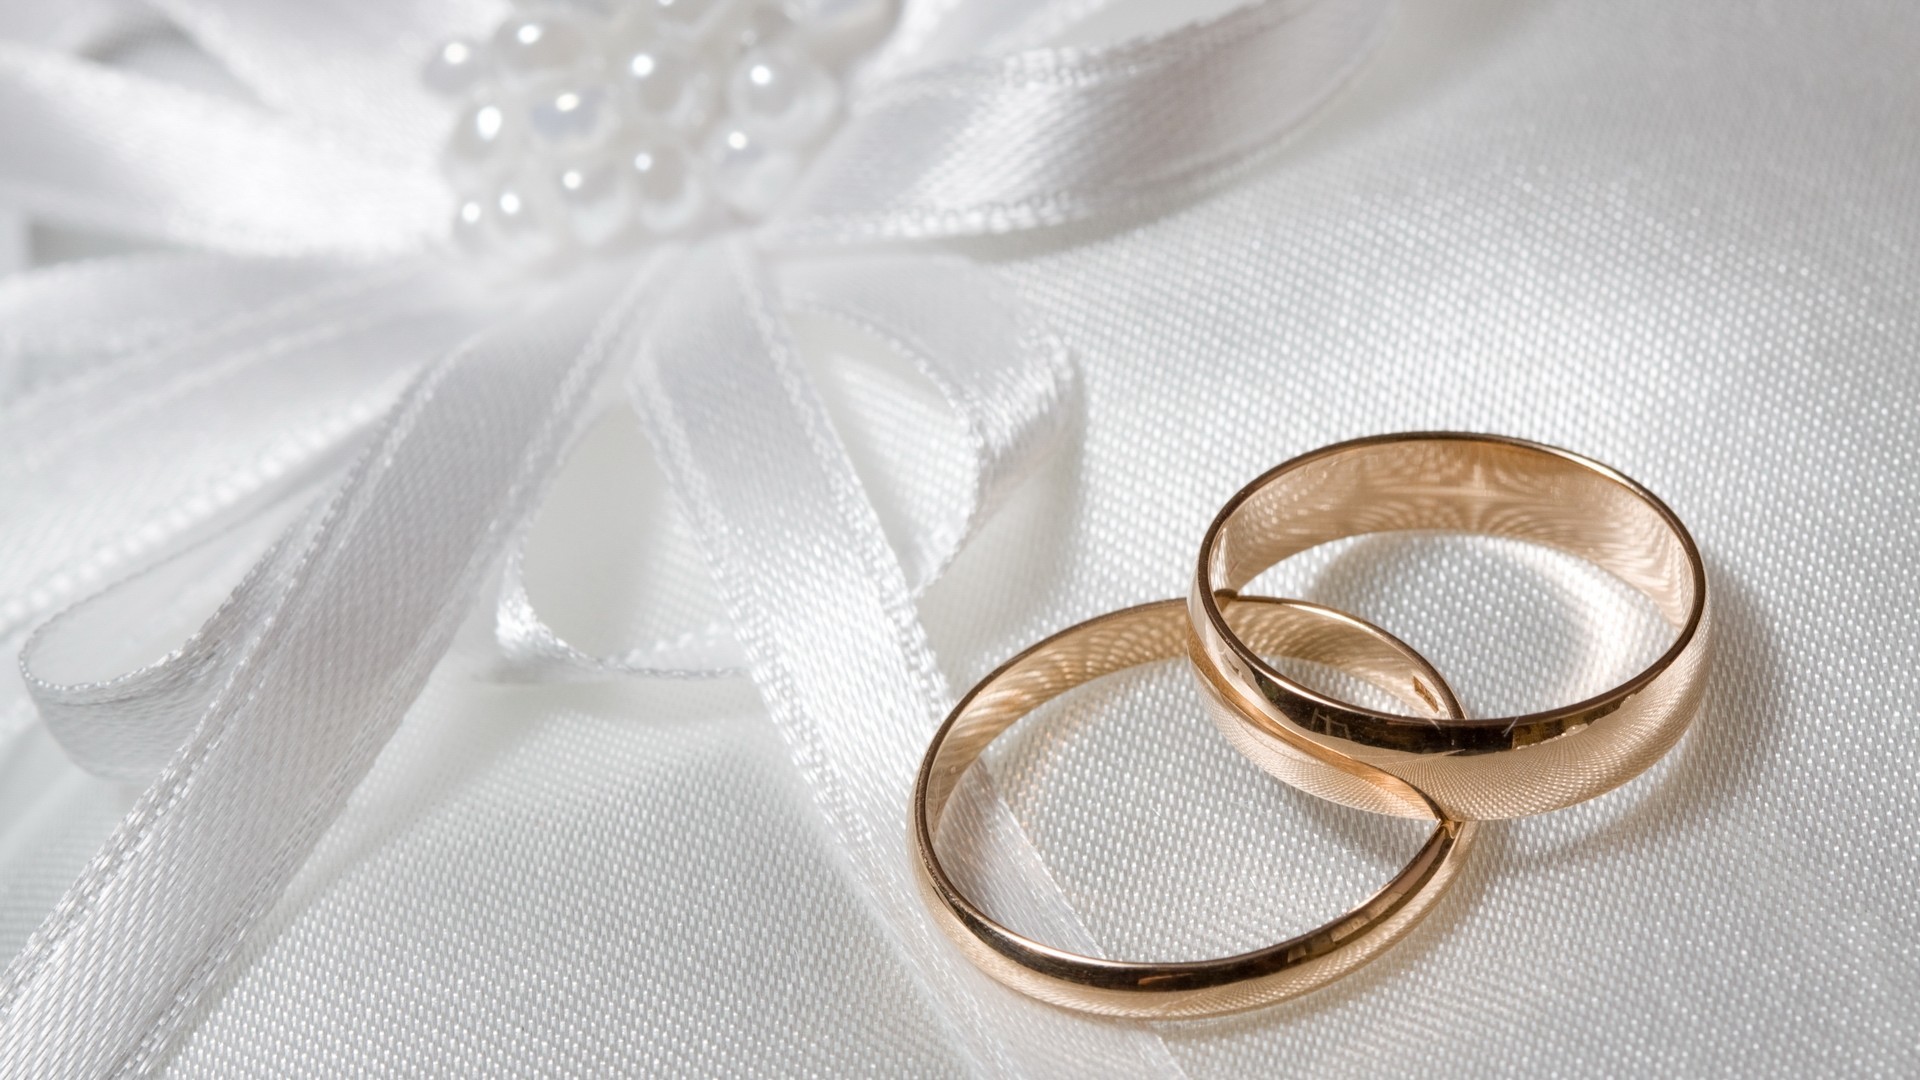 hochzeit wallpaper,wedding ring,wedding ceremony supply,ring,fashion accessory,jewellery